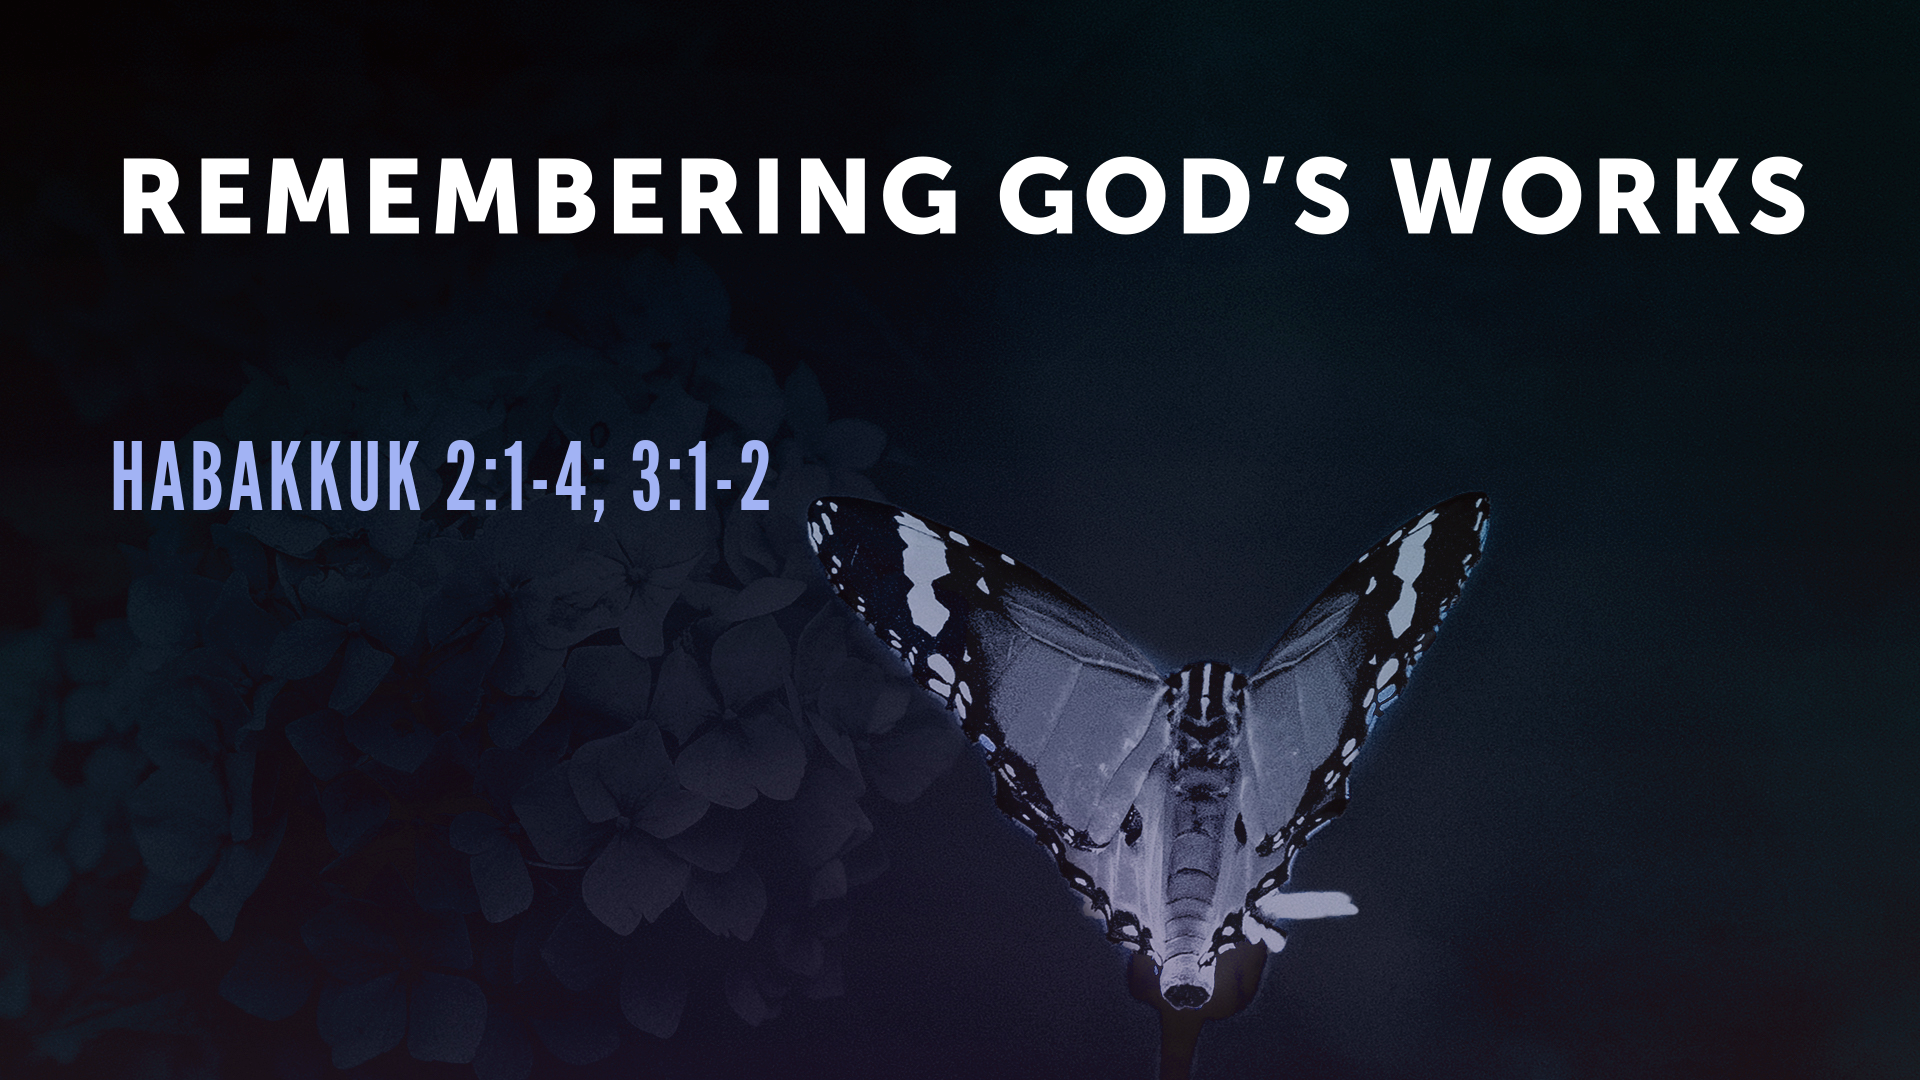 Nov 21, 2021 - Remembering God's Works (Video) - Habakkuk 2: 1-4; 3: 1-2